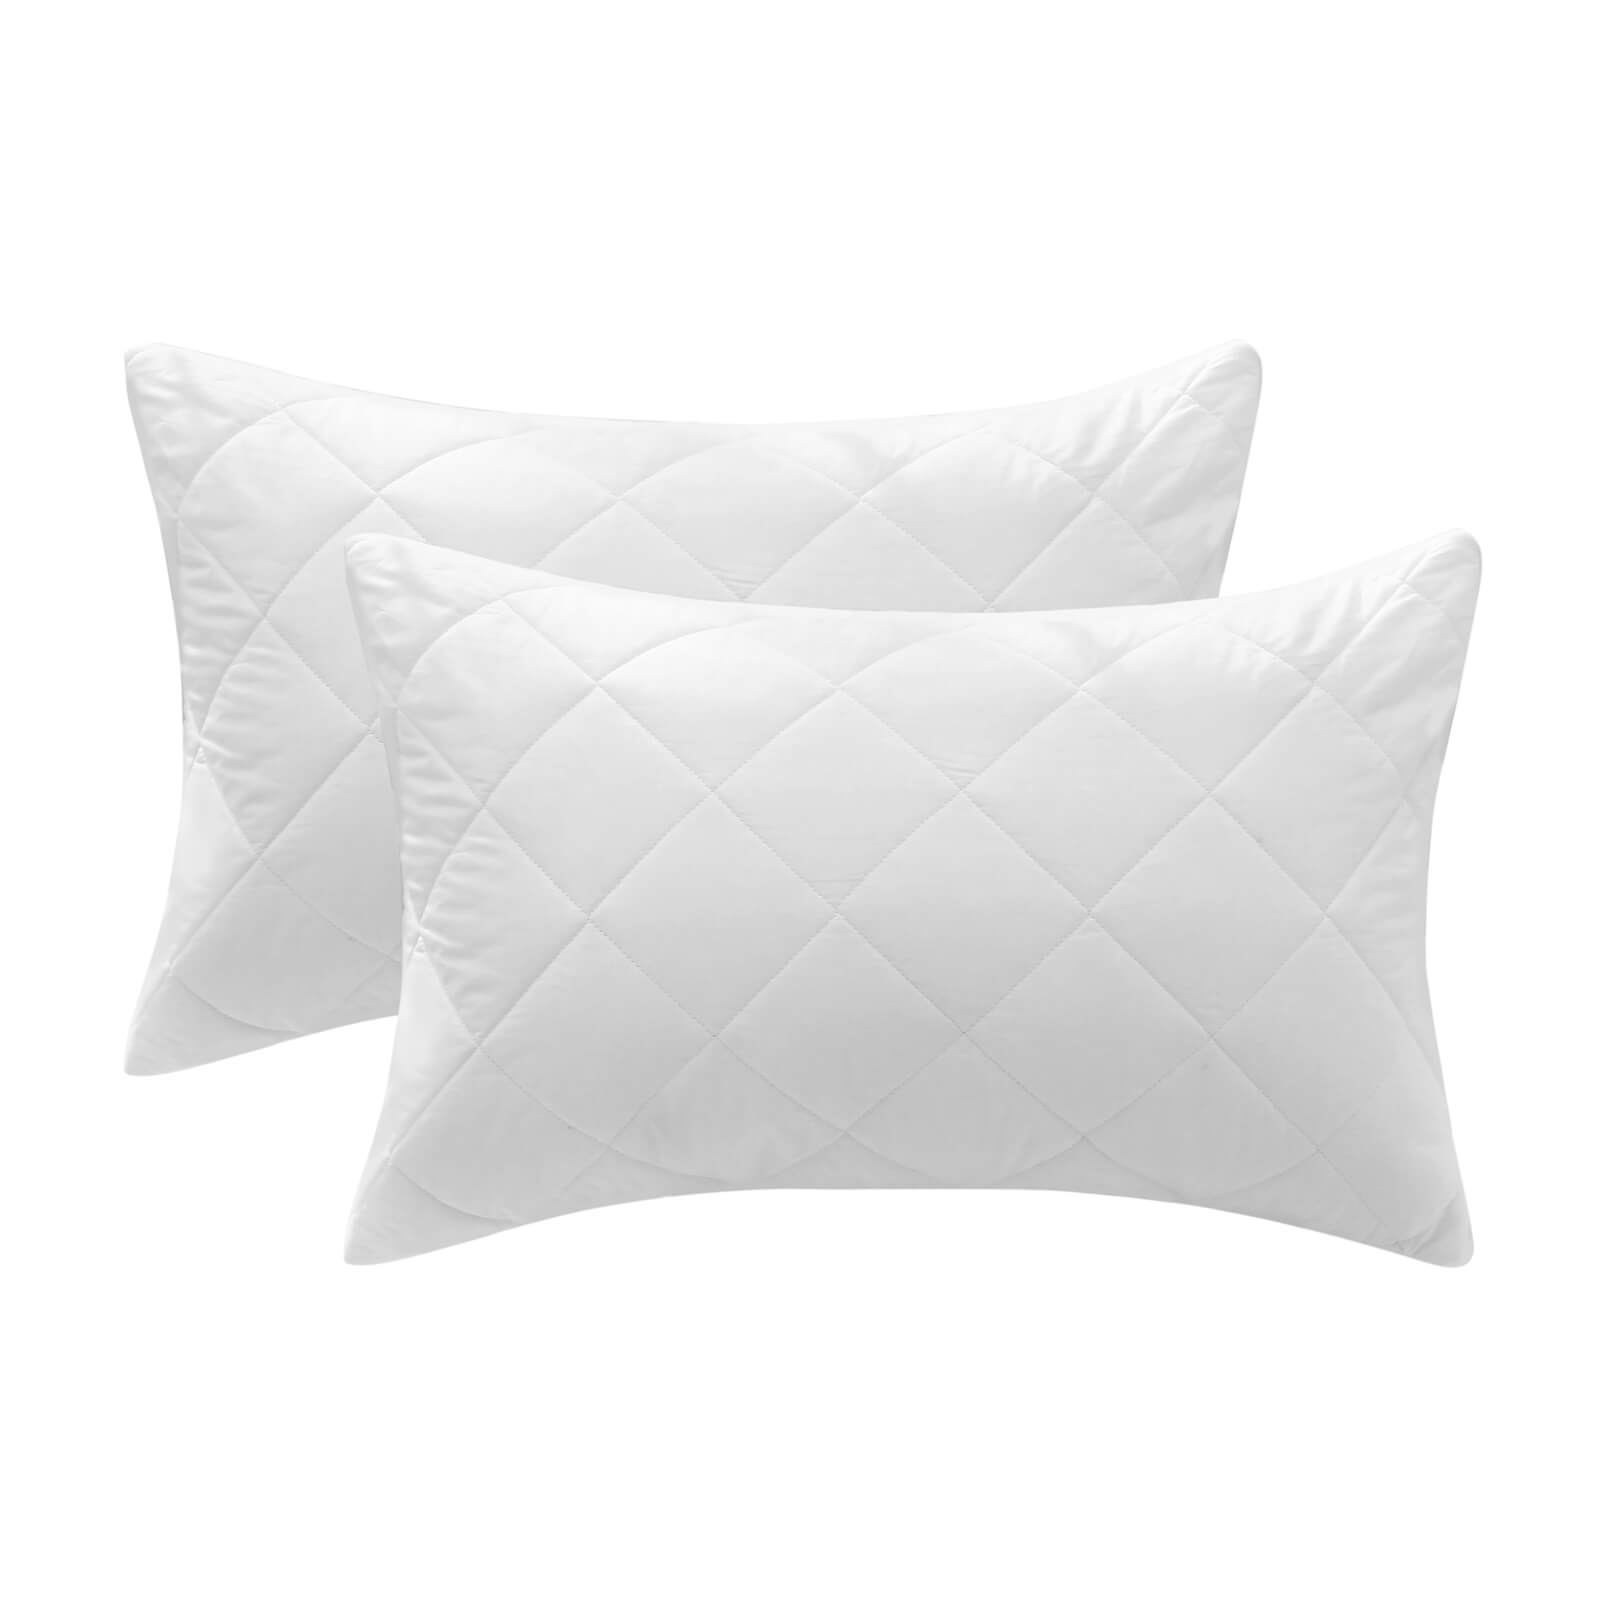 Anti-Allergy Pillow Protector - 100% Cotton